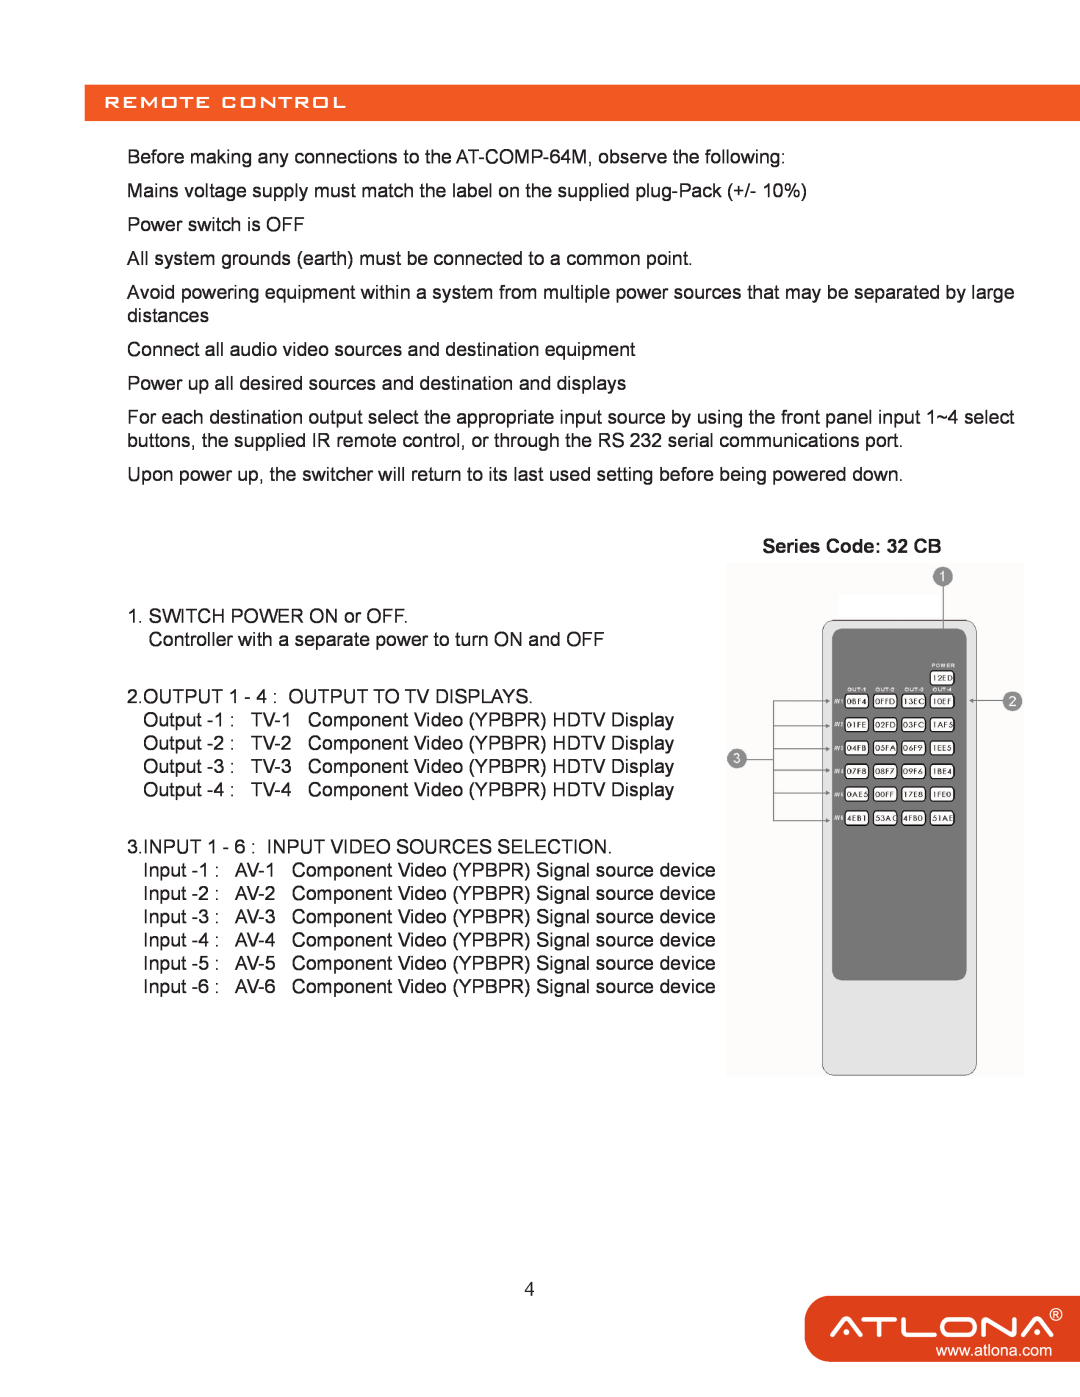 Atlona 64 M user manual Remote Control, Series Code: 32 CB 